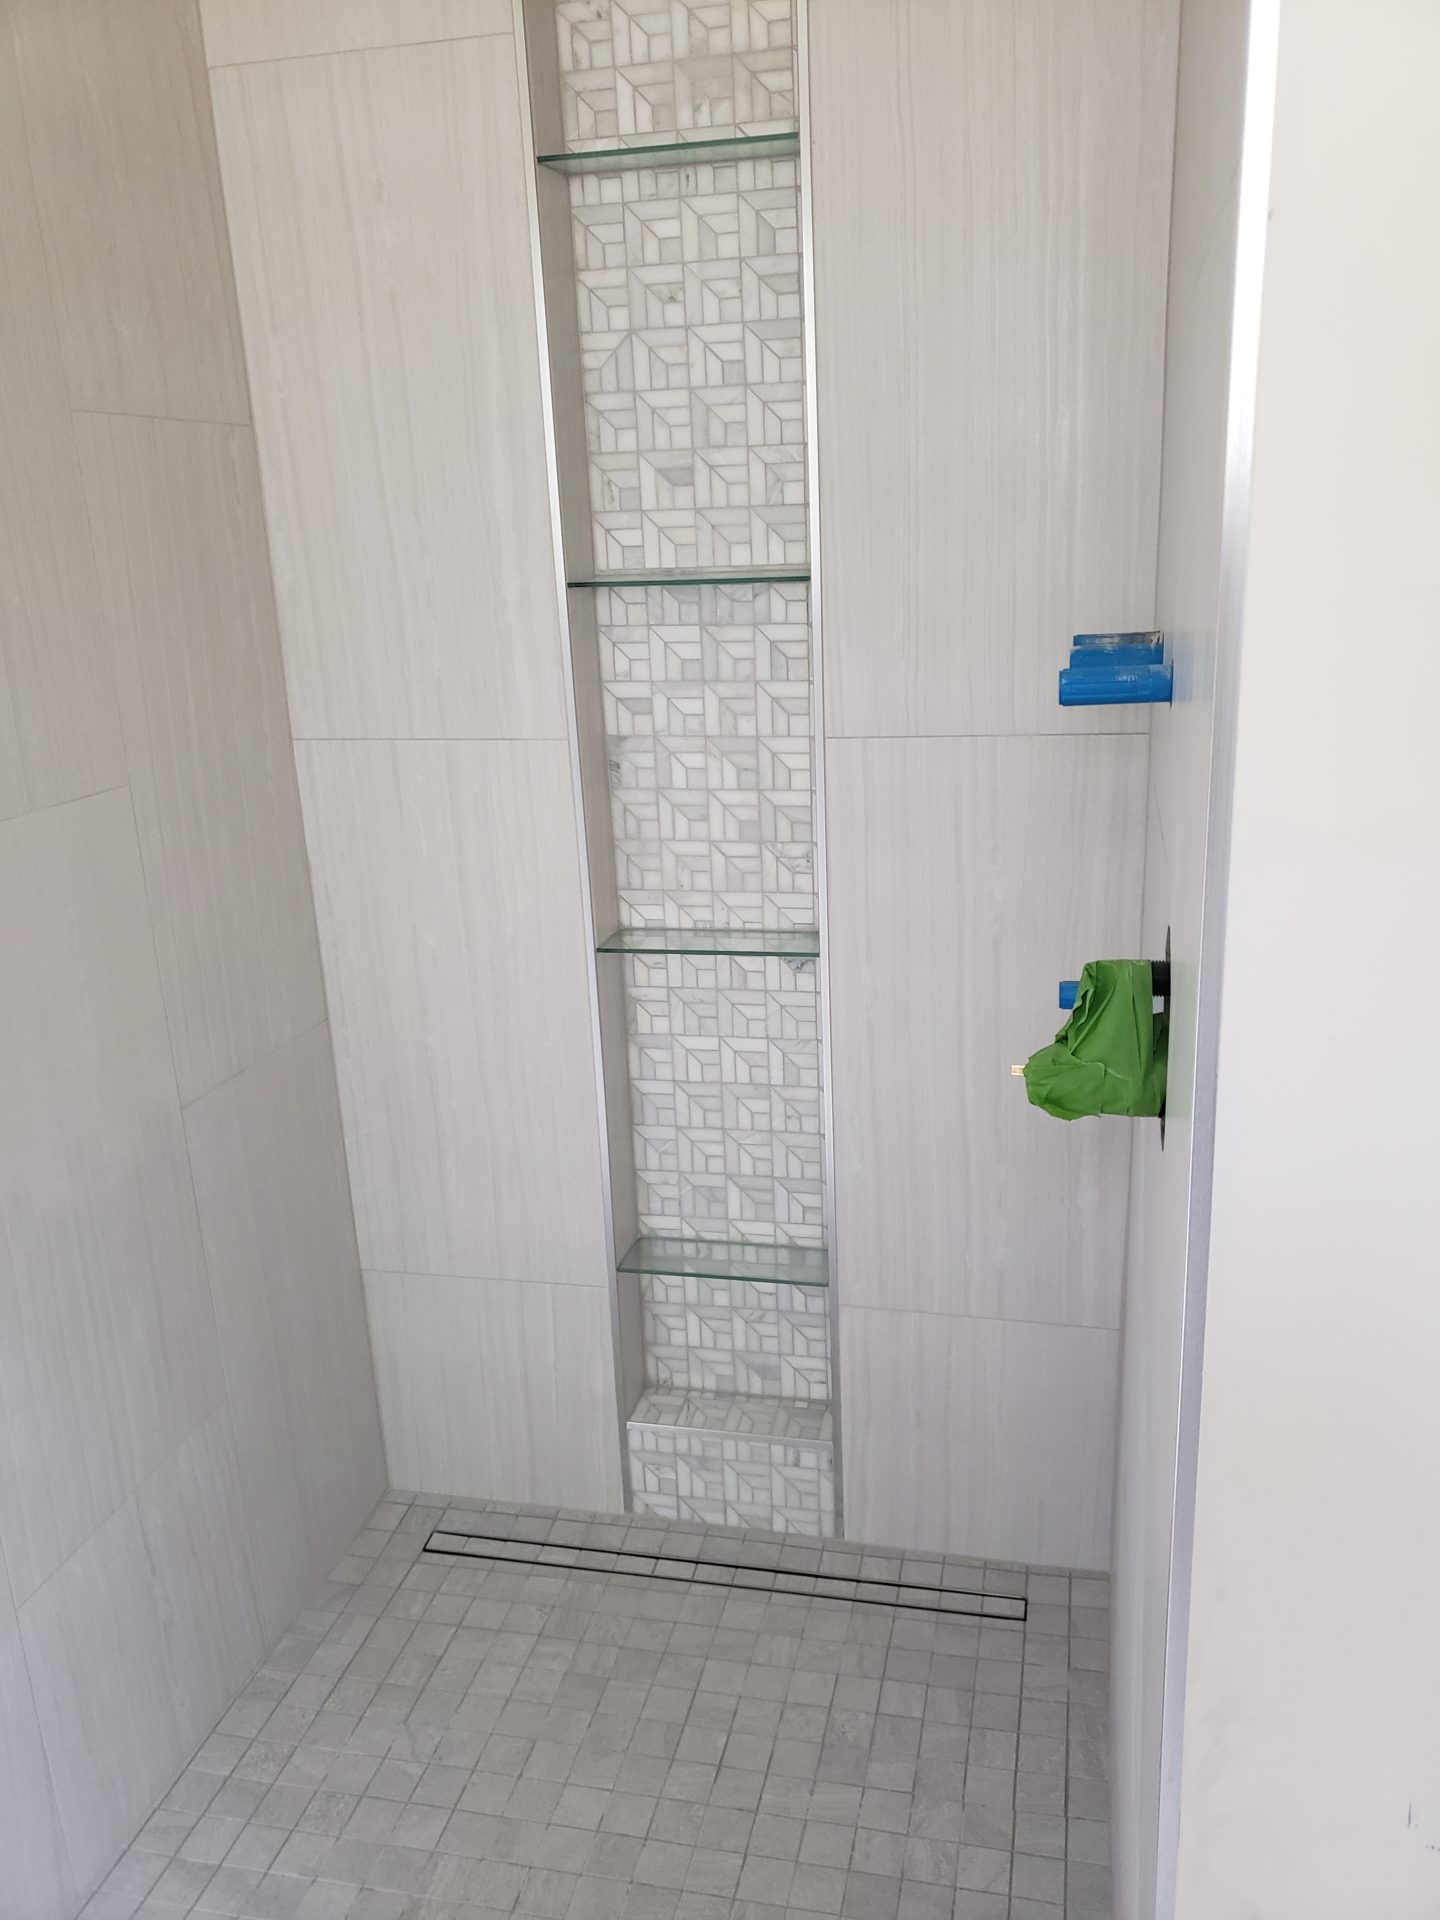 Shower design mistakes